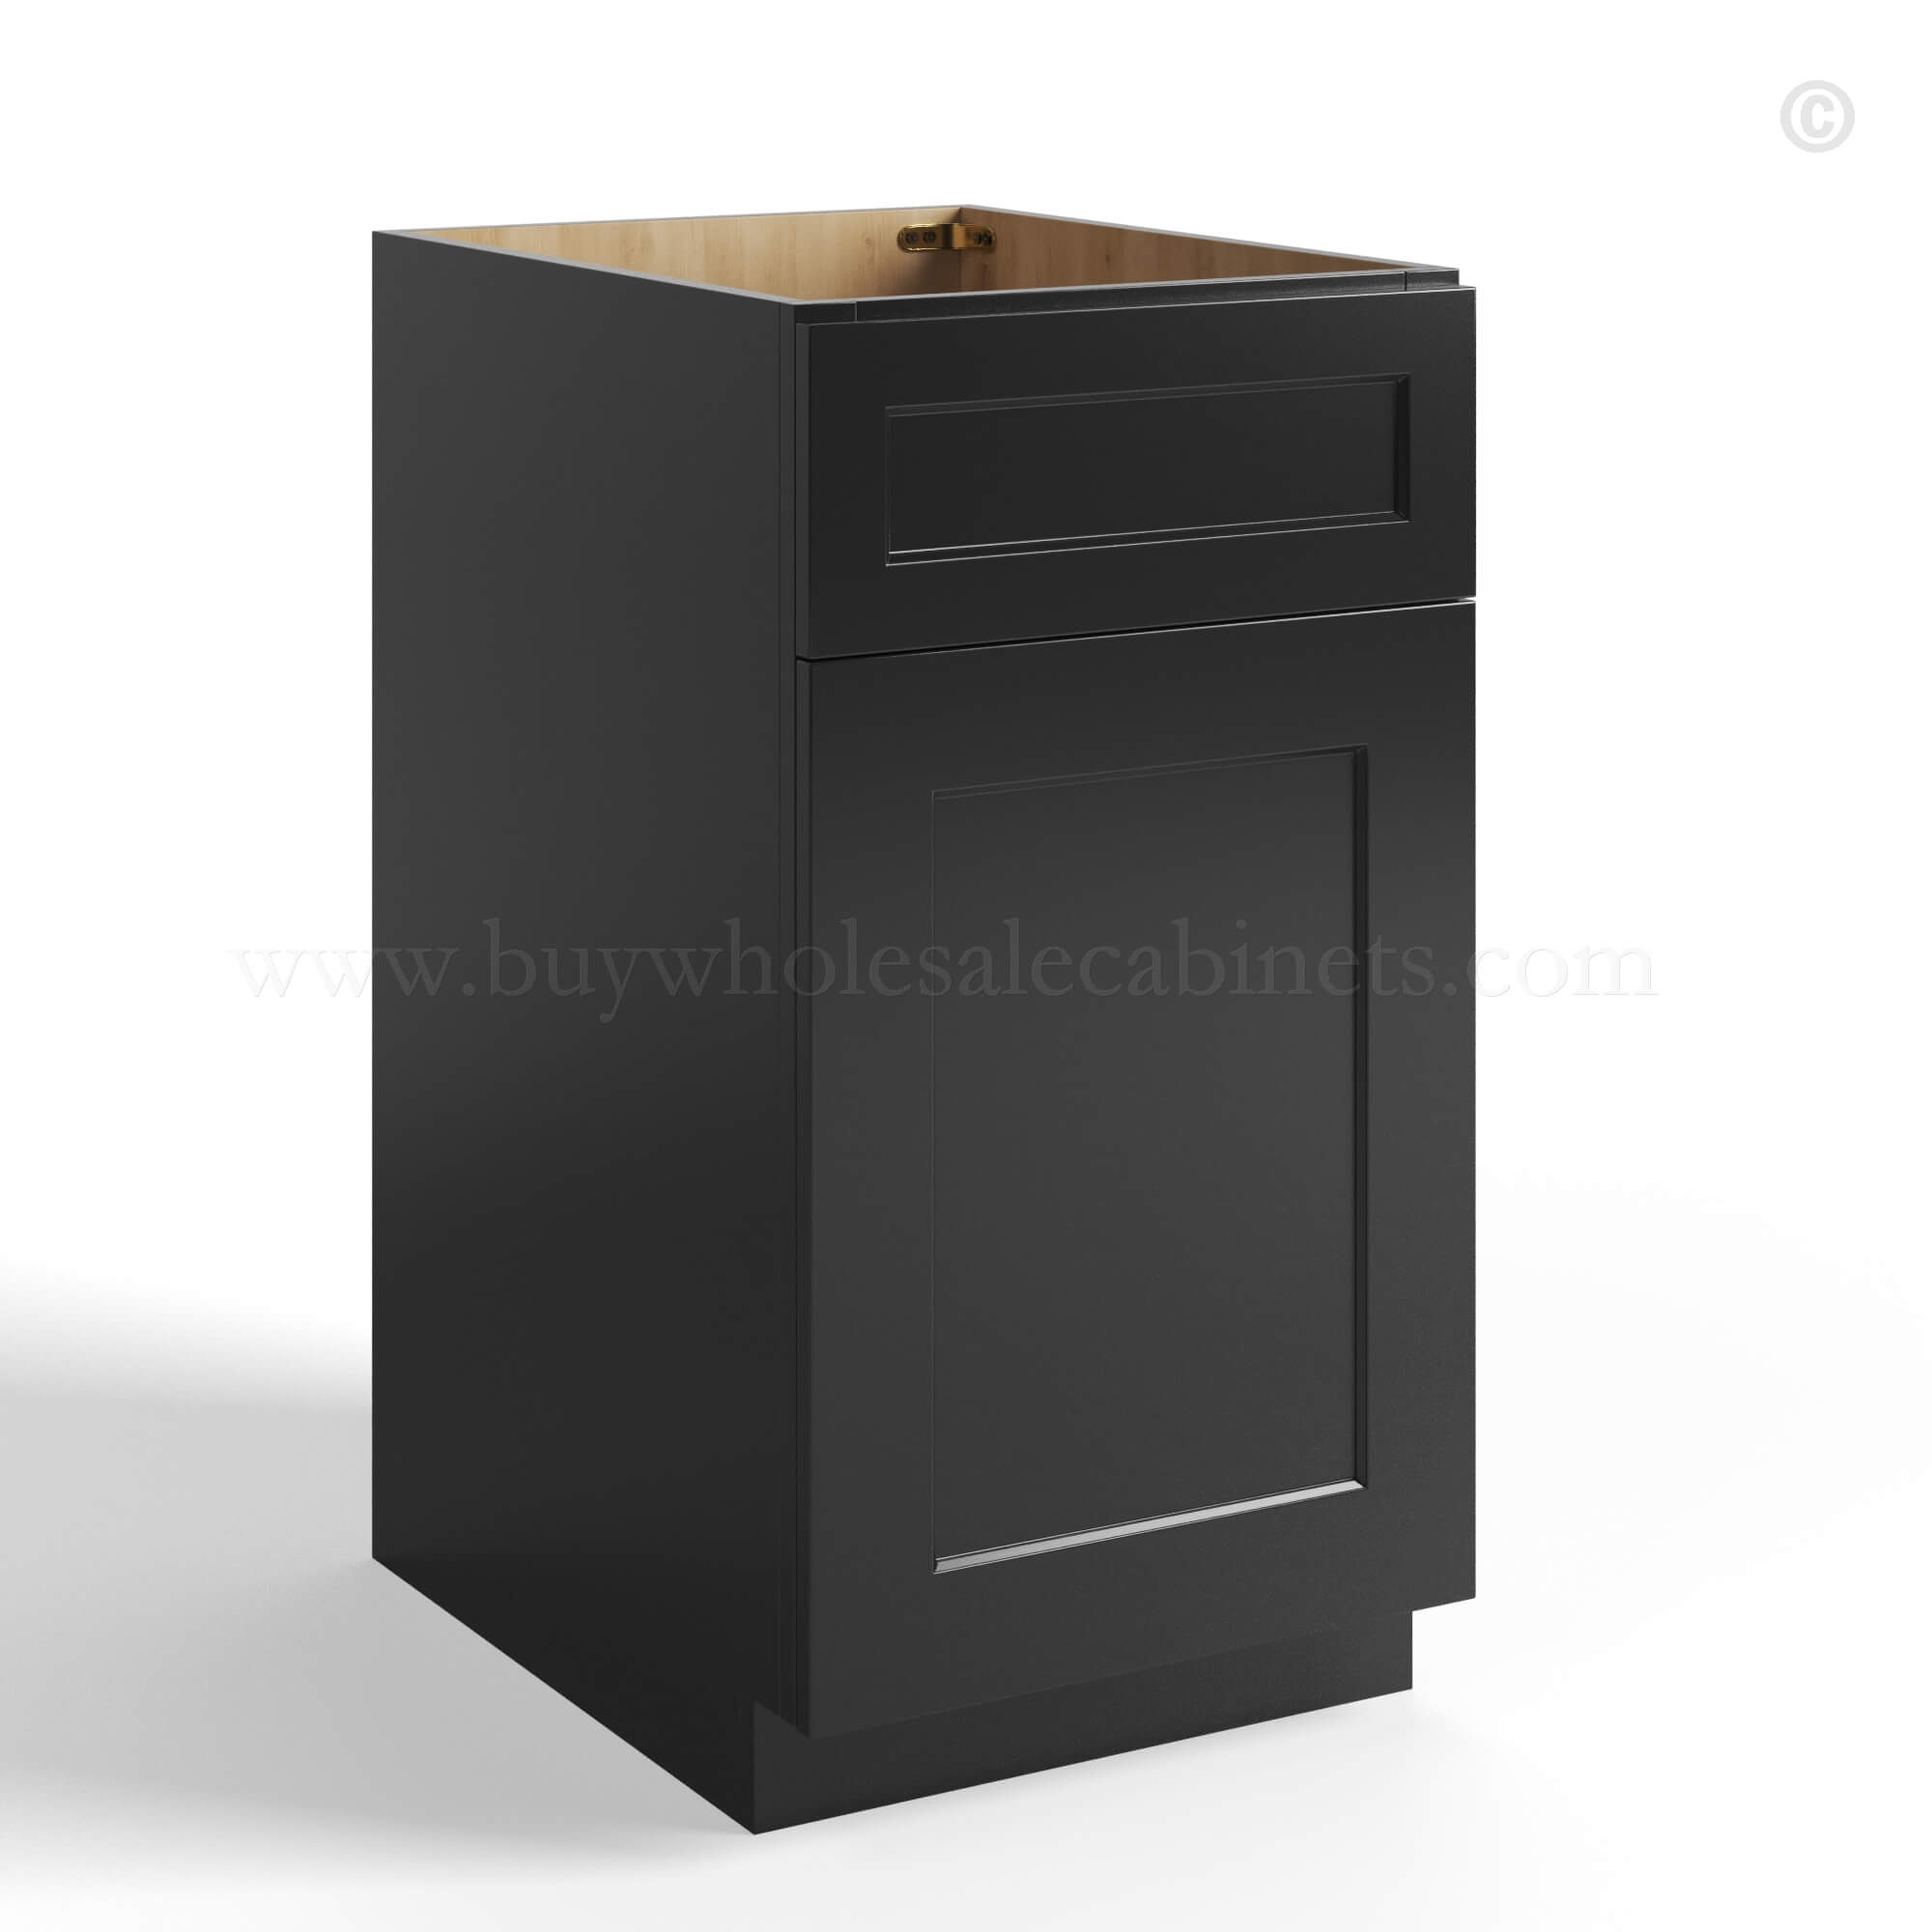 Black Shaker Base Trash Cabinet, rta cabinets, wholesale cabinets